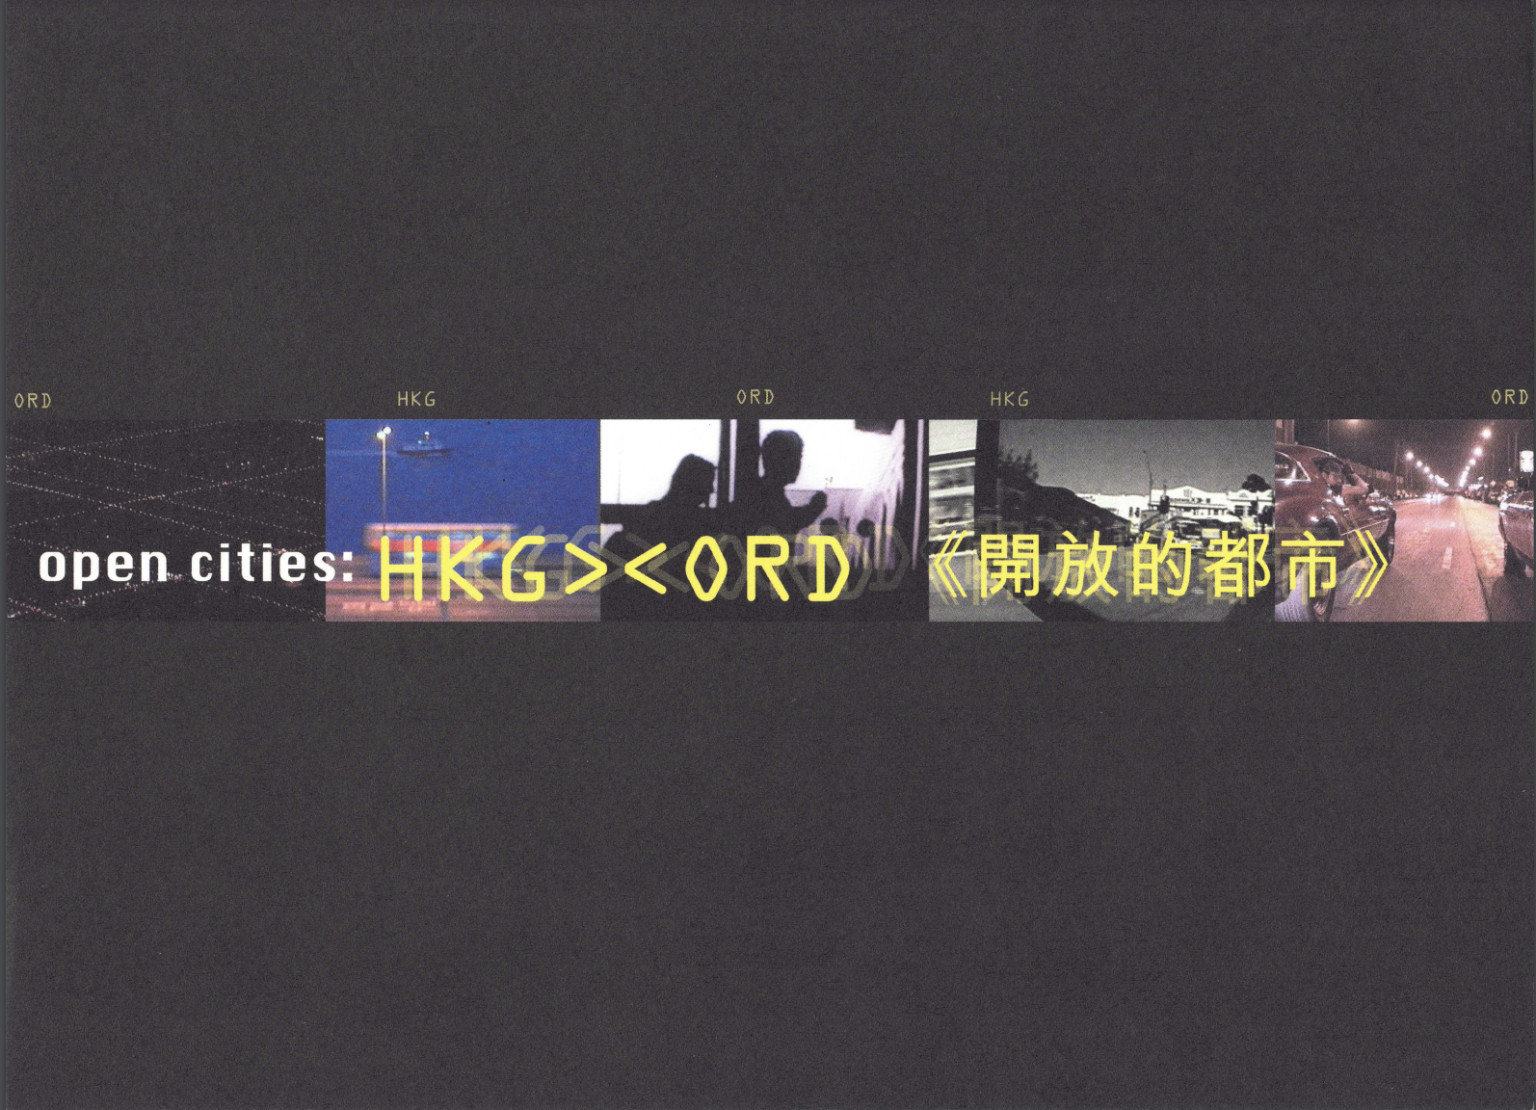 Open Cities: HKG ORD – Postcard 《開放的都市》- 明信片